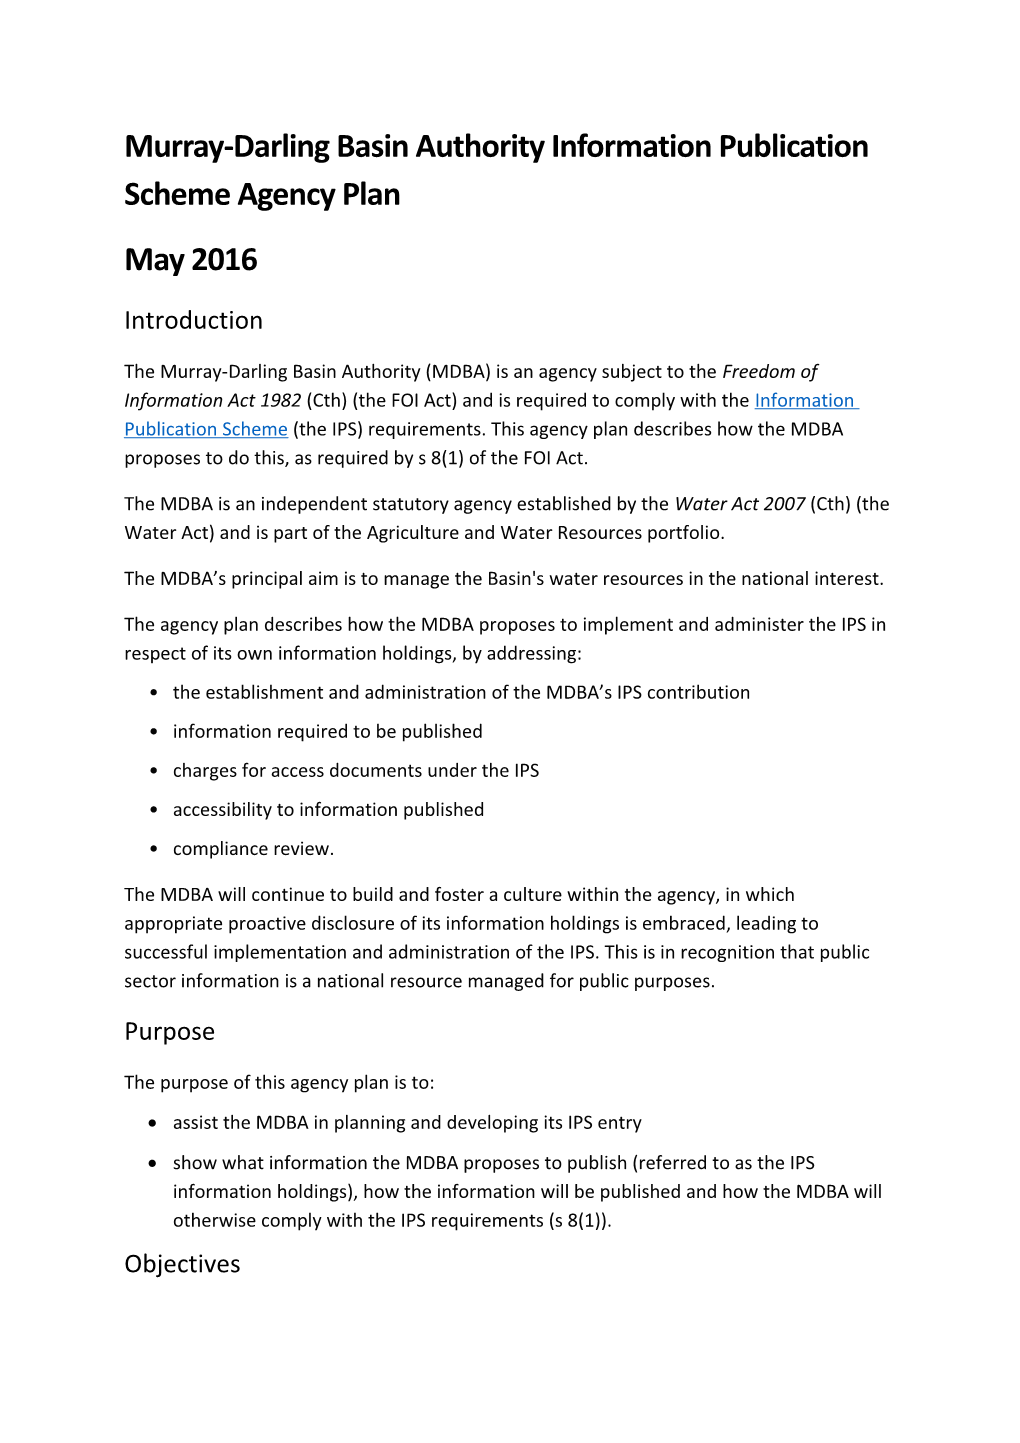 MDBA Information Publication Scheme Agency Plan - May 2016